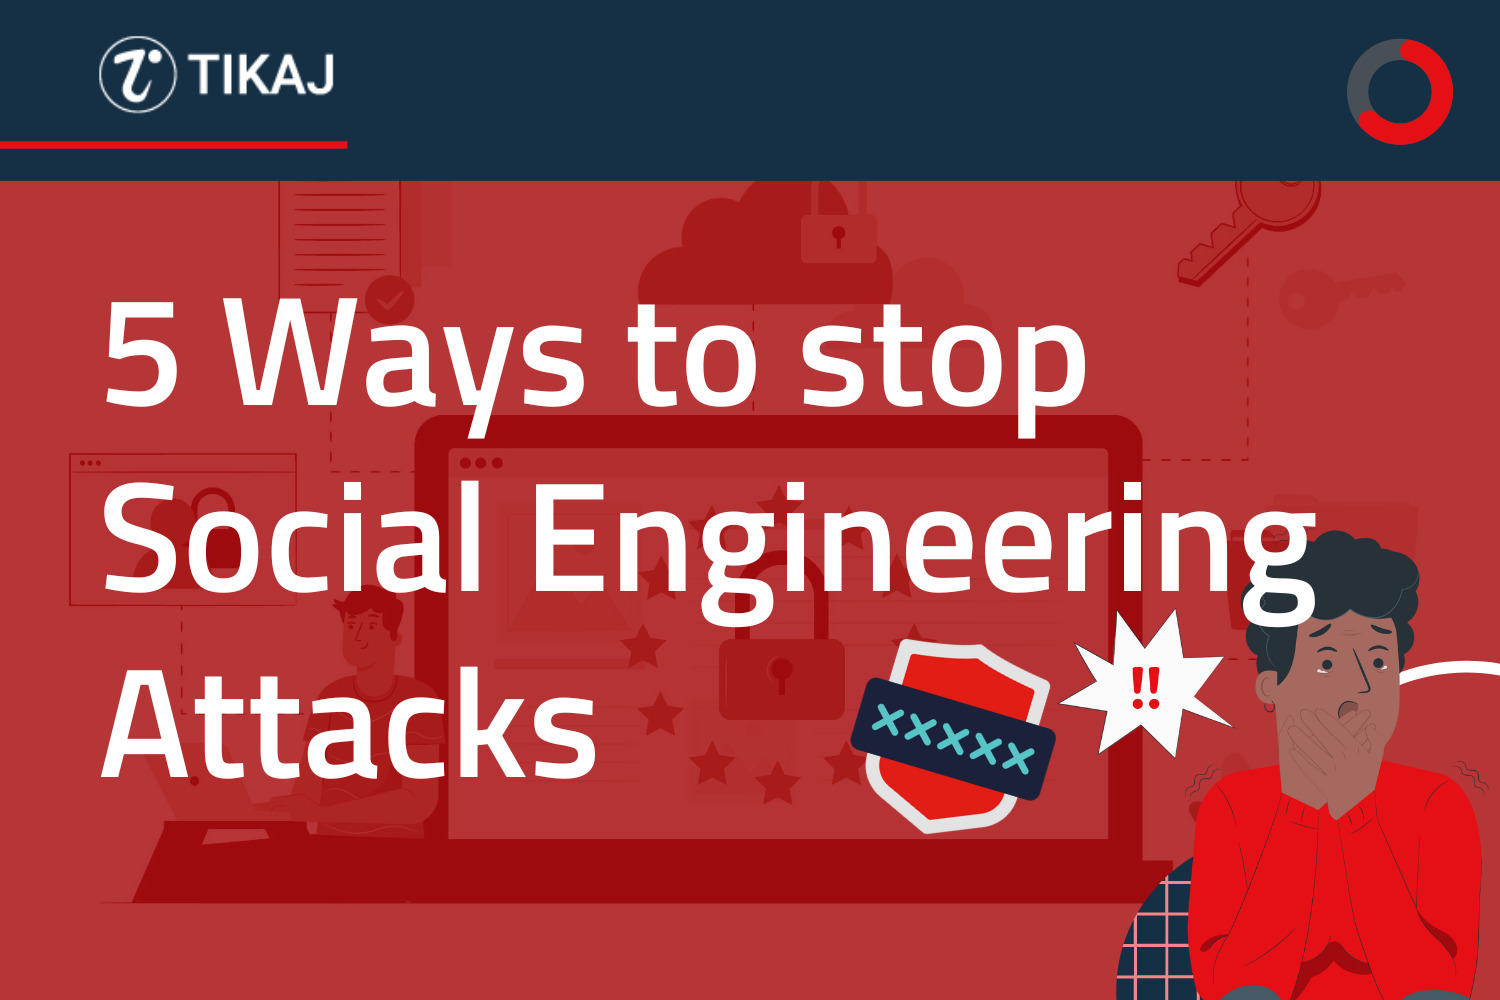 5 Ways to stop Social Engineering Attacks